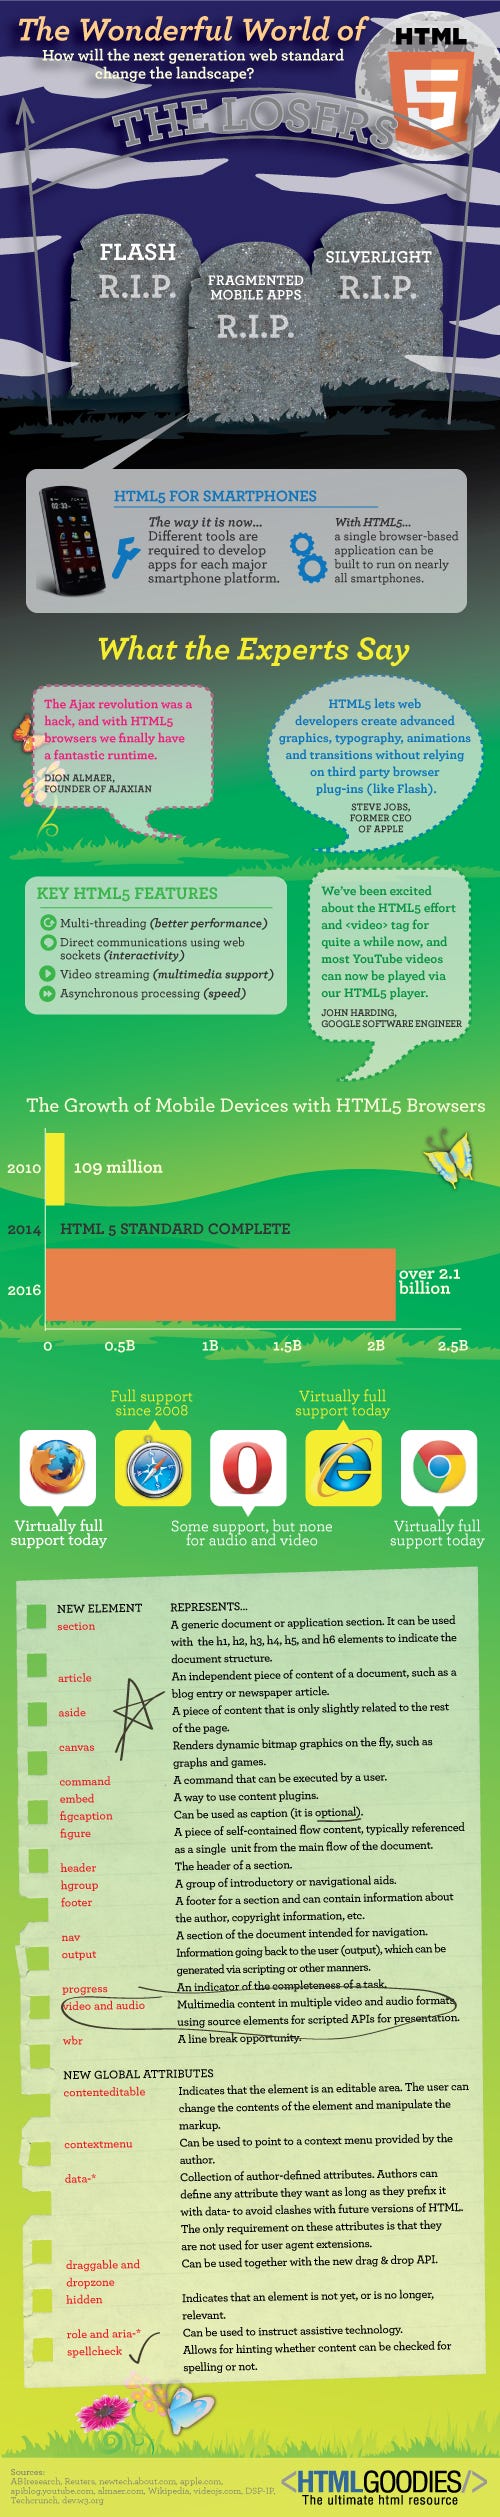 Wonderful World of HTML5 [Infographic]